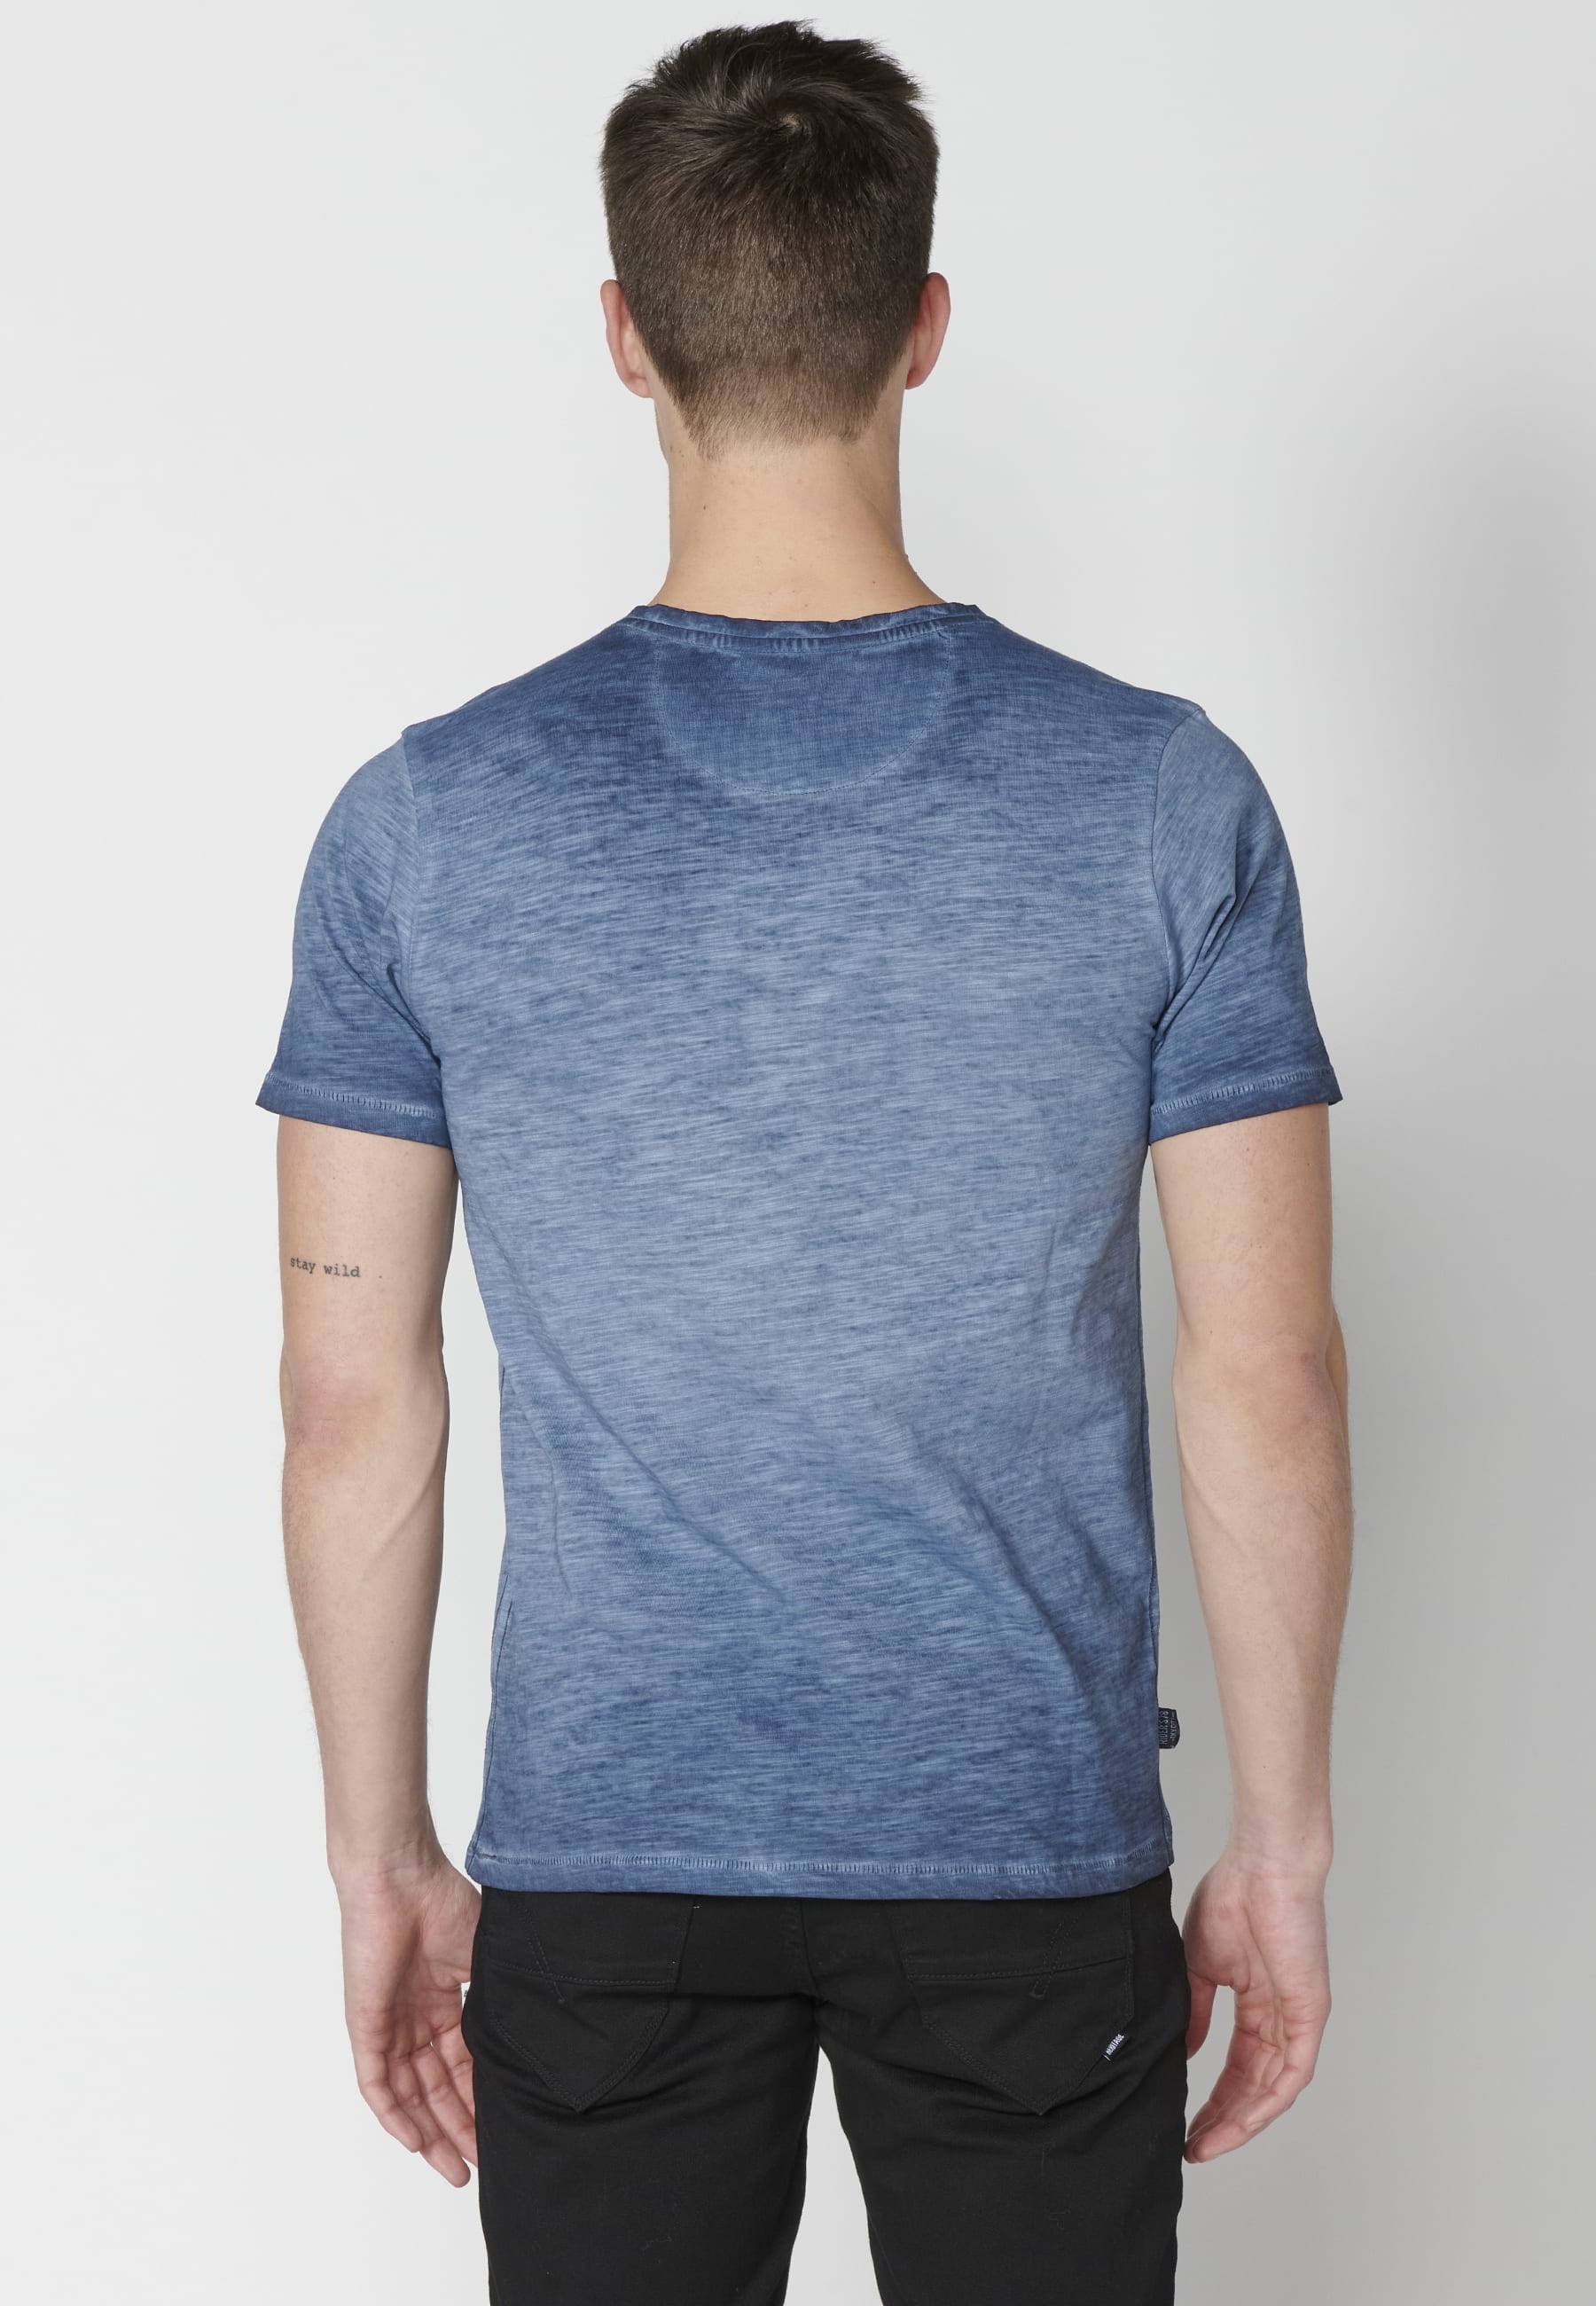 Camiseta manga corta de Algodón color Indigo para Hombre